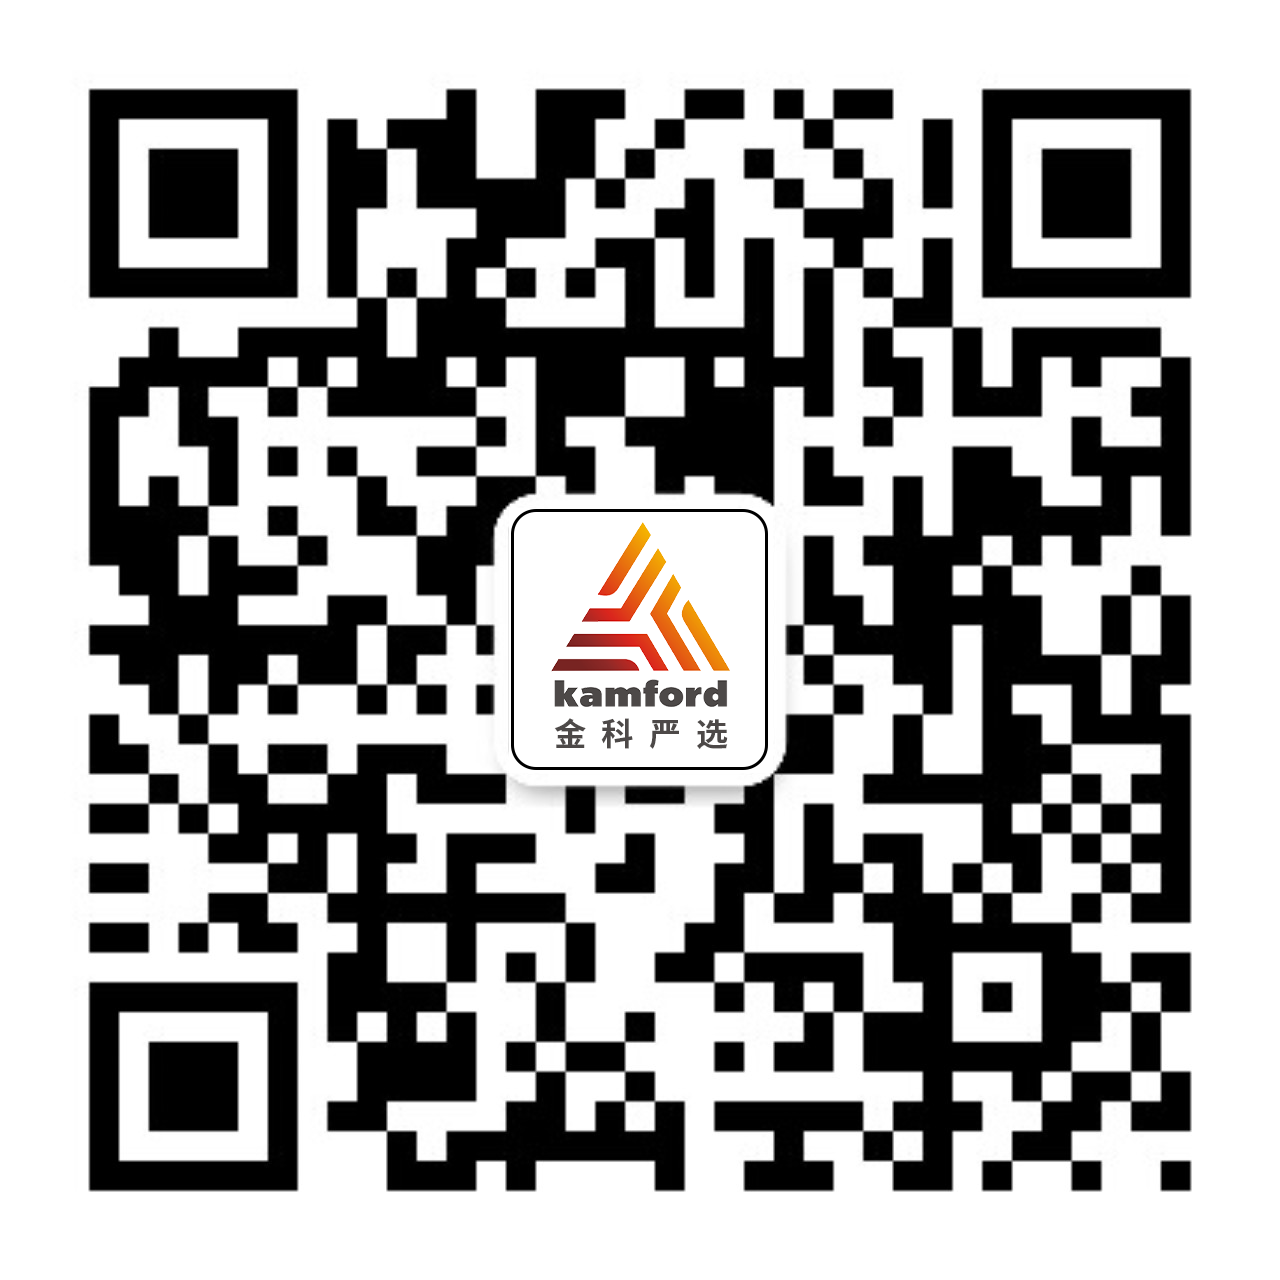 KAMFORD (CHINA) COMPANY LIMITED 微信公眾號 : 金品優選